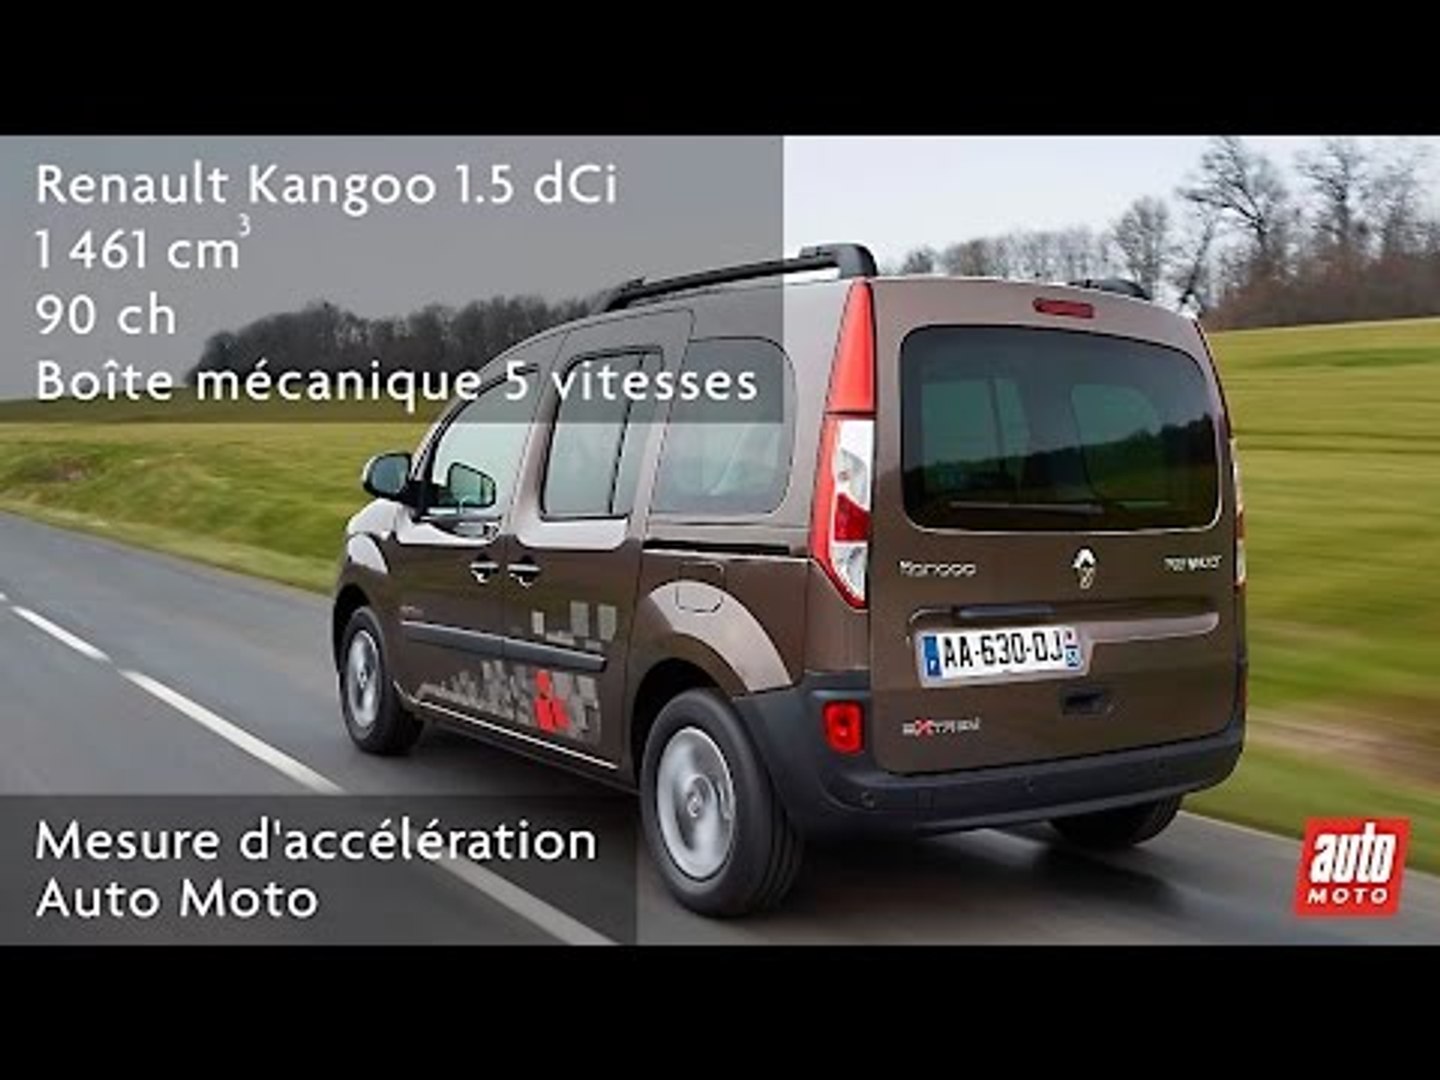 Renault Kangoo 1.5 dCi - Vidéo Dailymotion